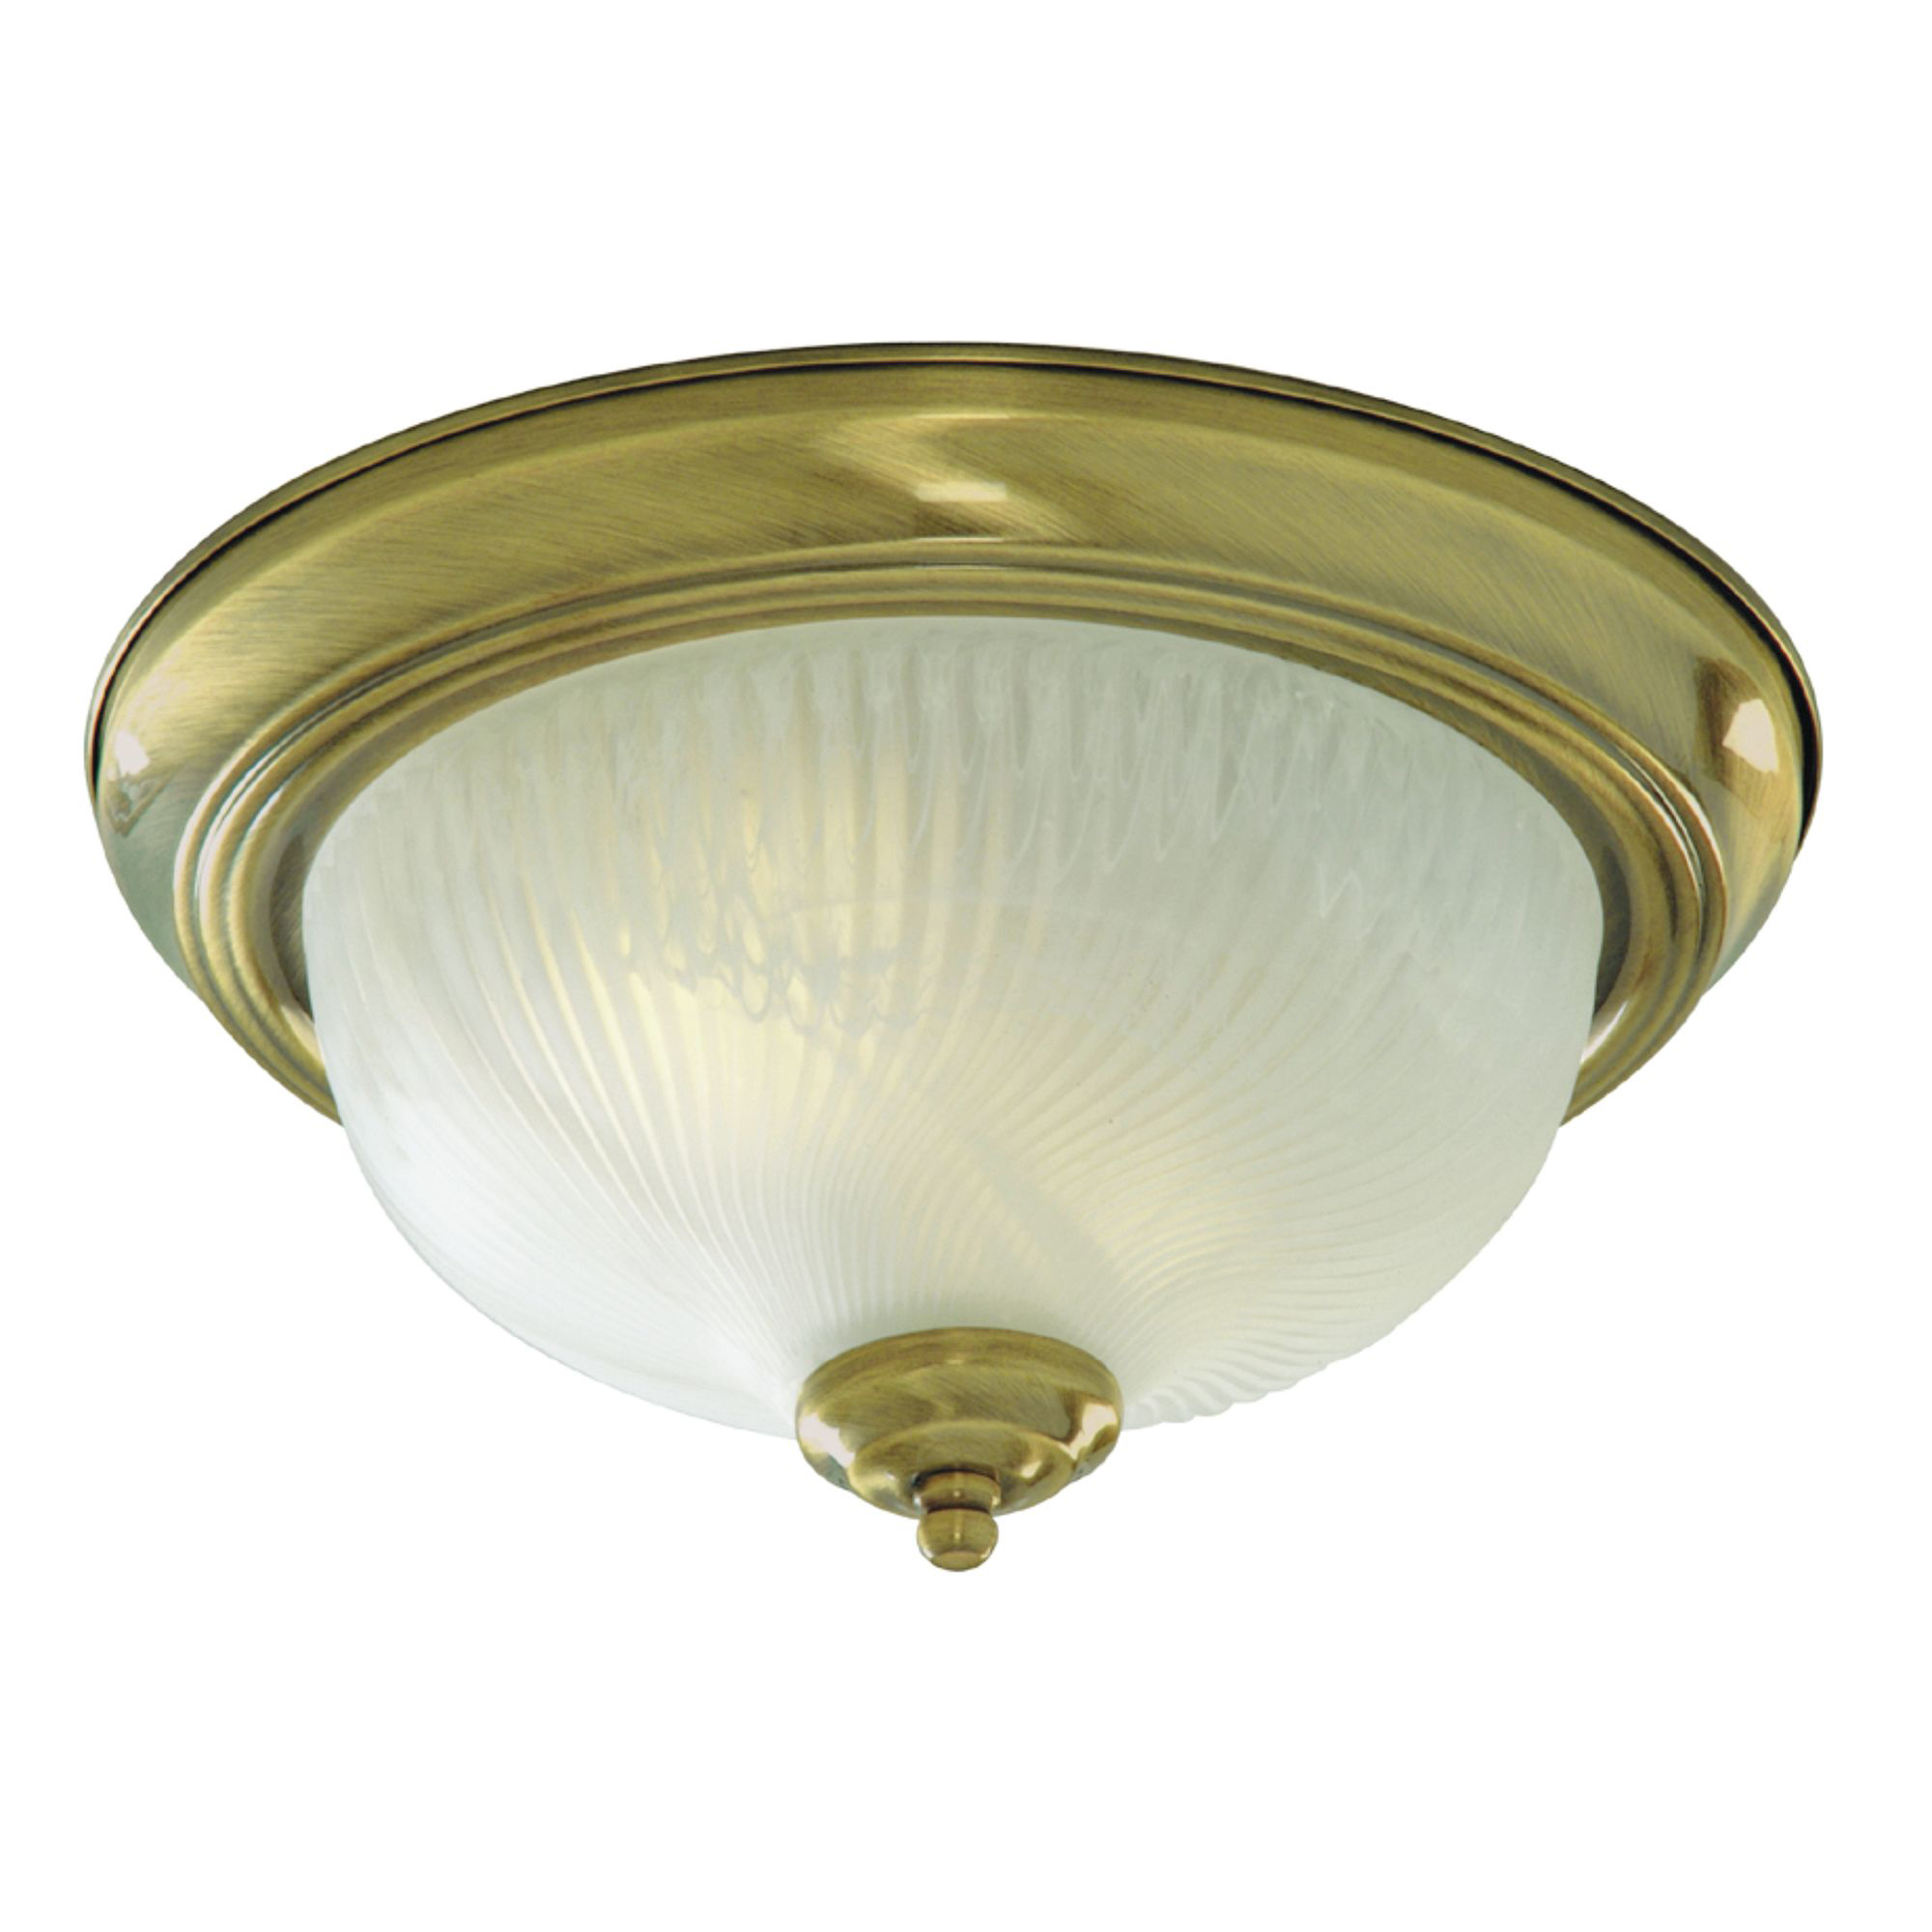 Parma 11Lt Flush Ceiling Light - Antique Brass & Glass